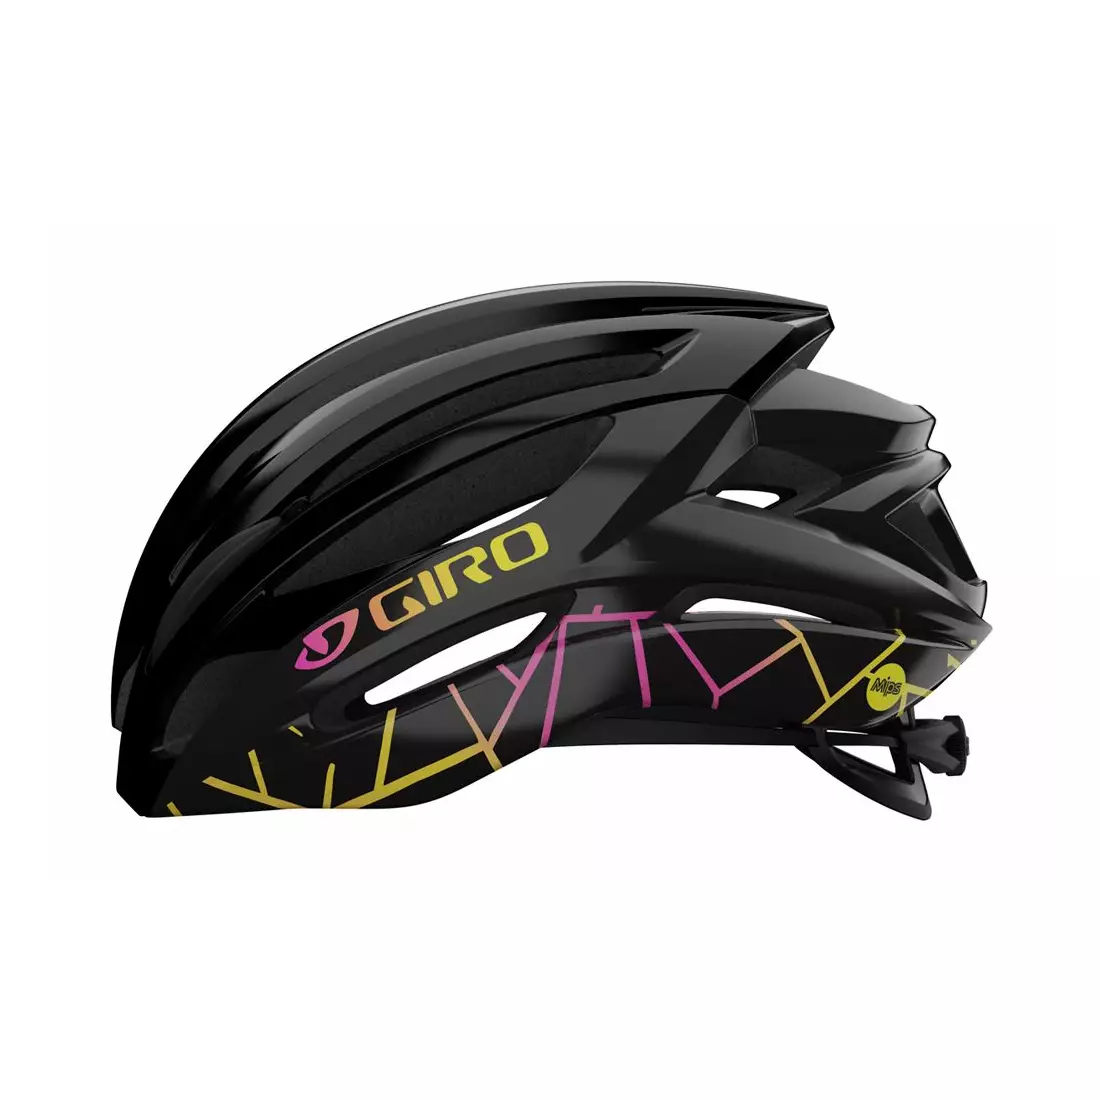 GIRO road bike helmet for women SEYEN INTEGRATED MIPS black craze GR-7129658